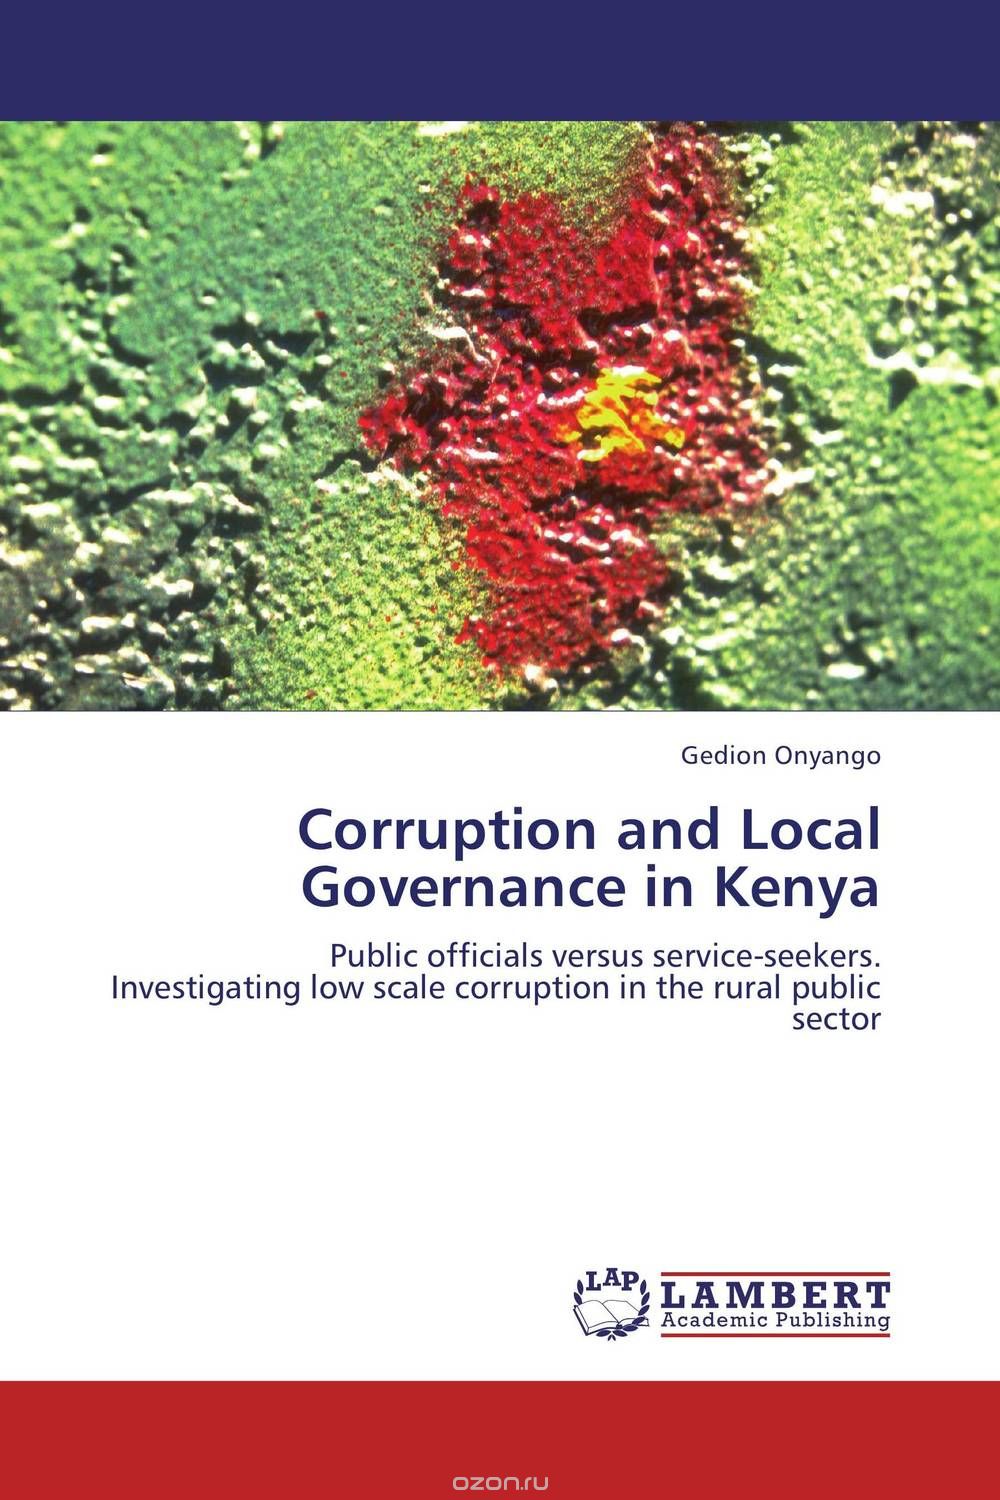 Скачать книгу "Corruption and Local Governance in Kenya"